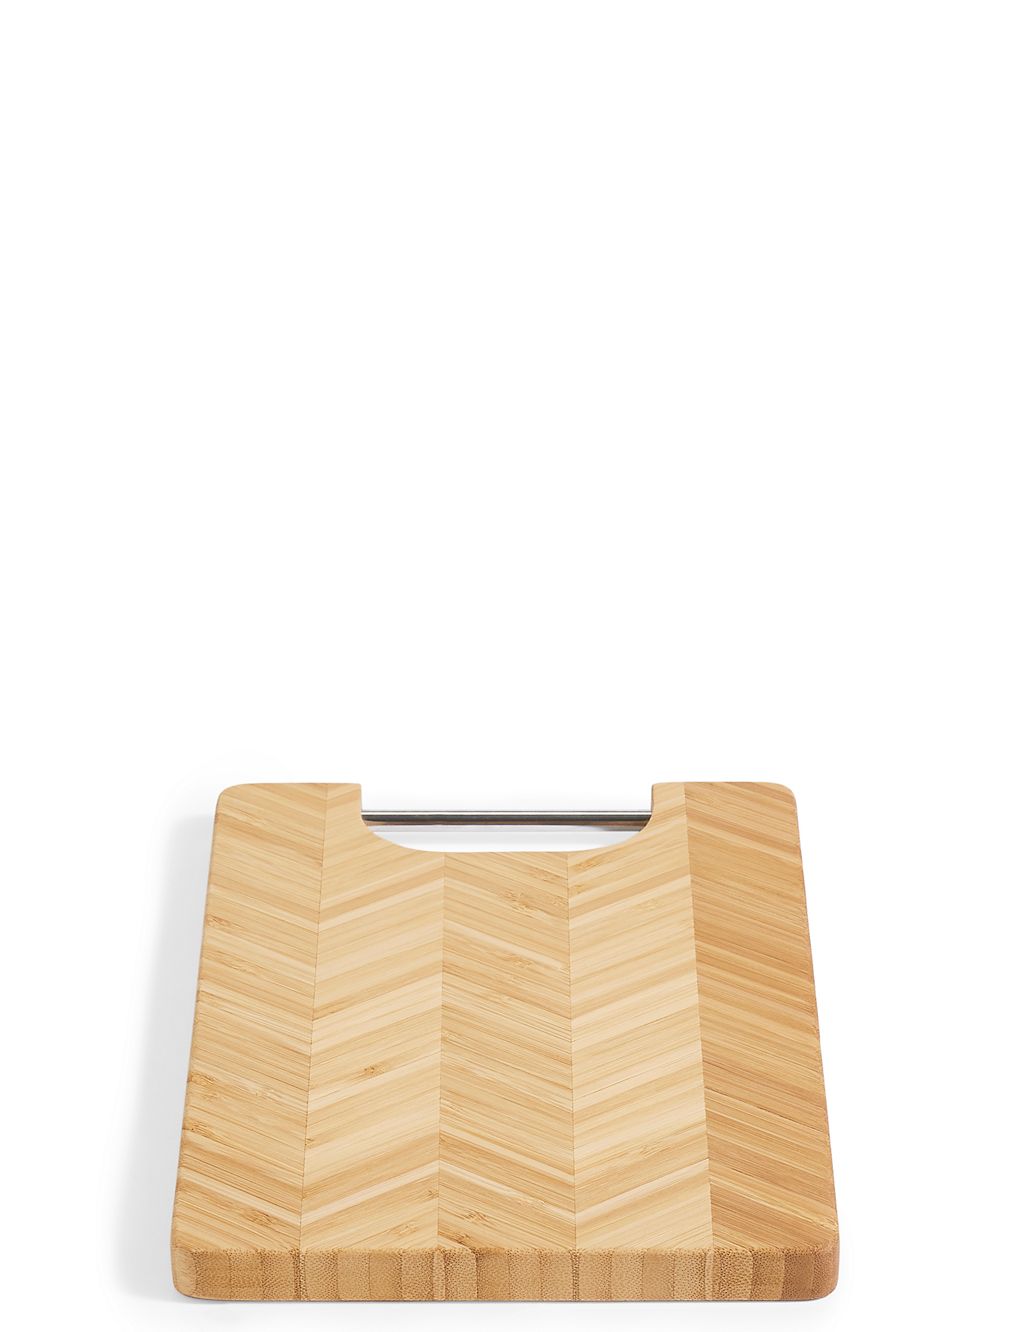 Hexagonal Bamboo Rectangler Small Chopping Board 3 of 4